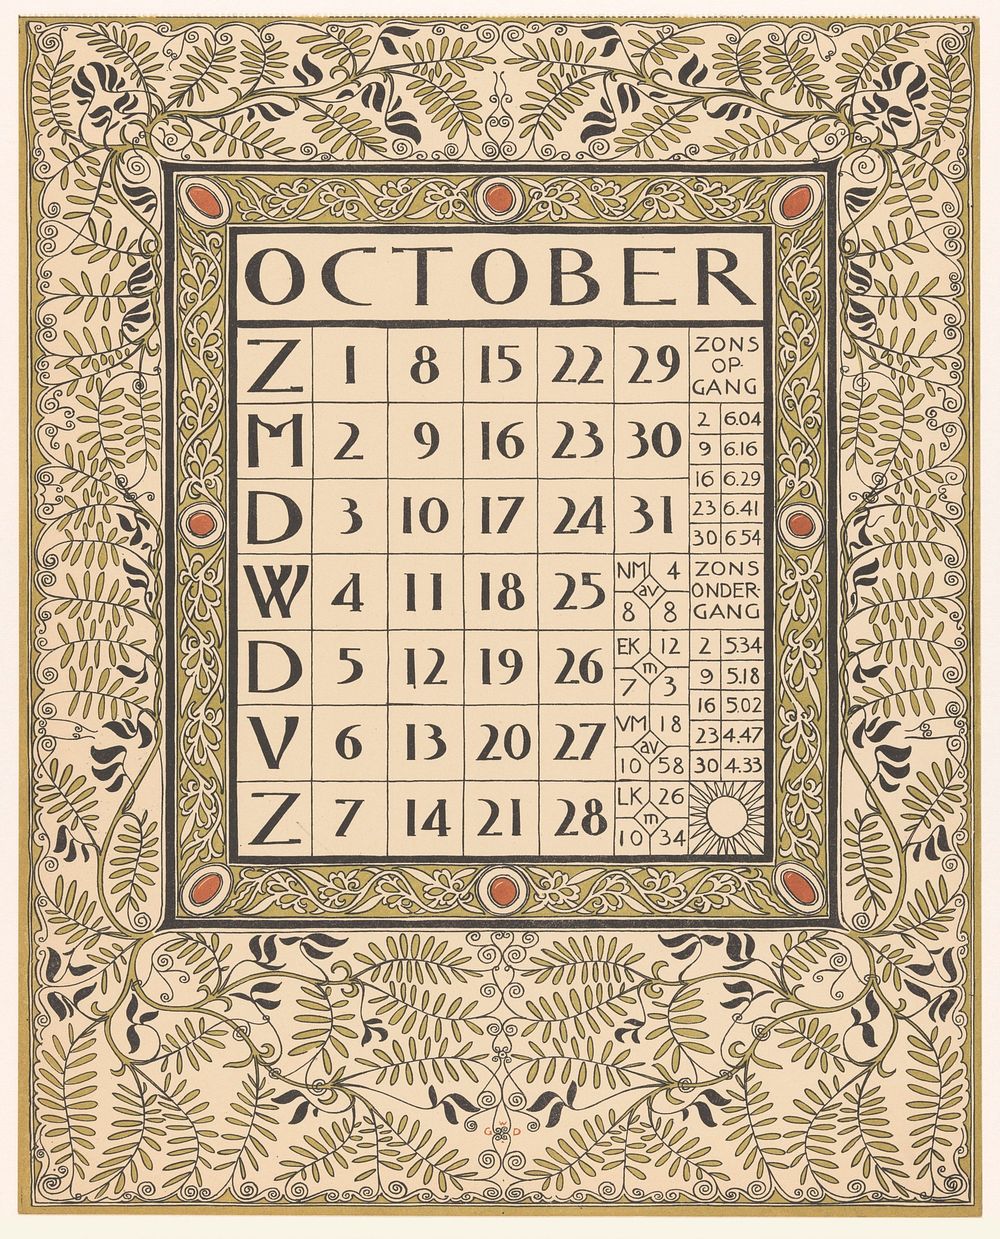 Kalenderblad voor oktober 1899 (1898) print in high resolution by Gerrit Willem Dijsselhof.  